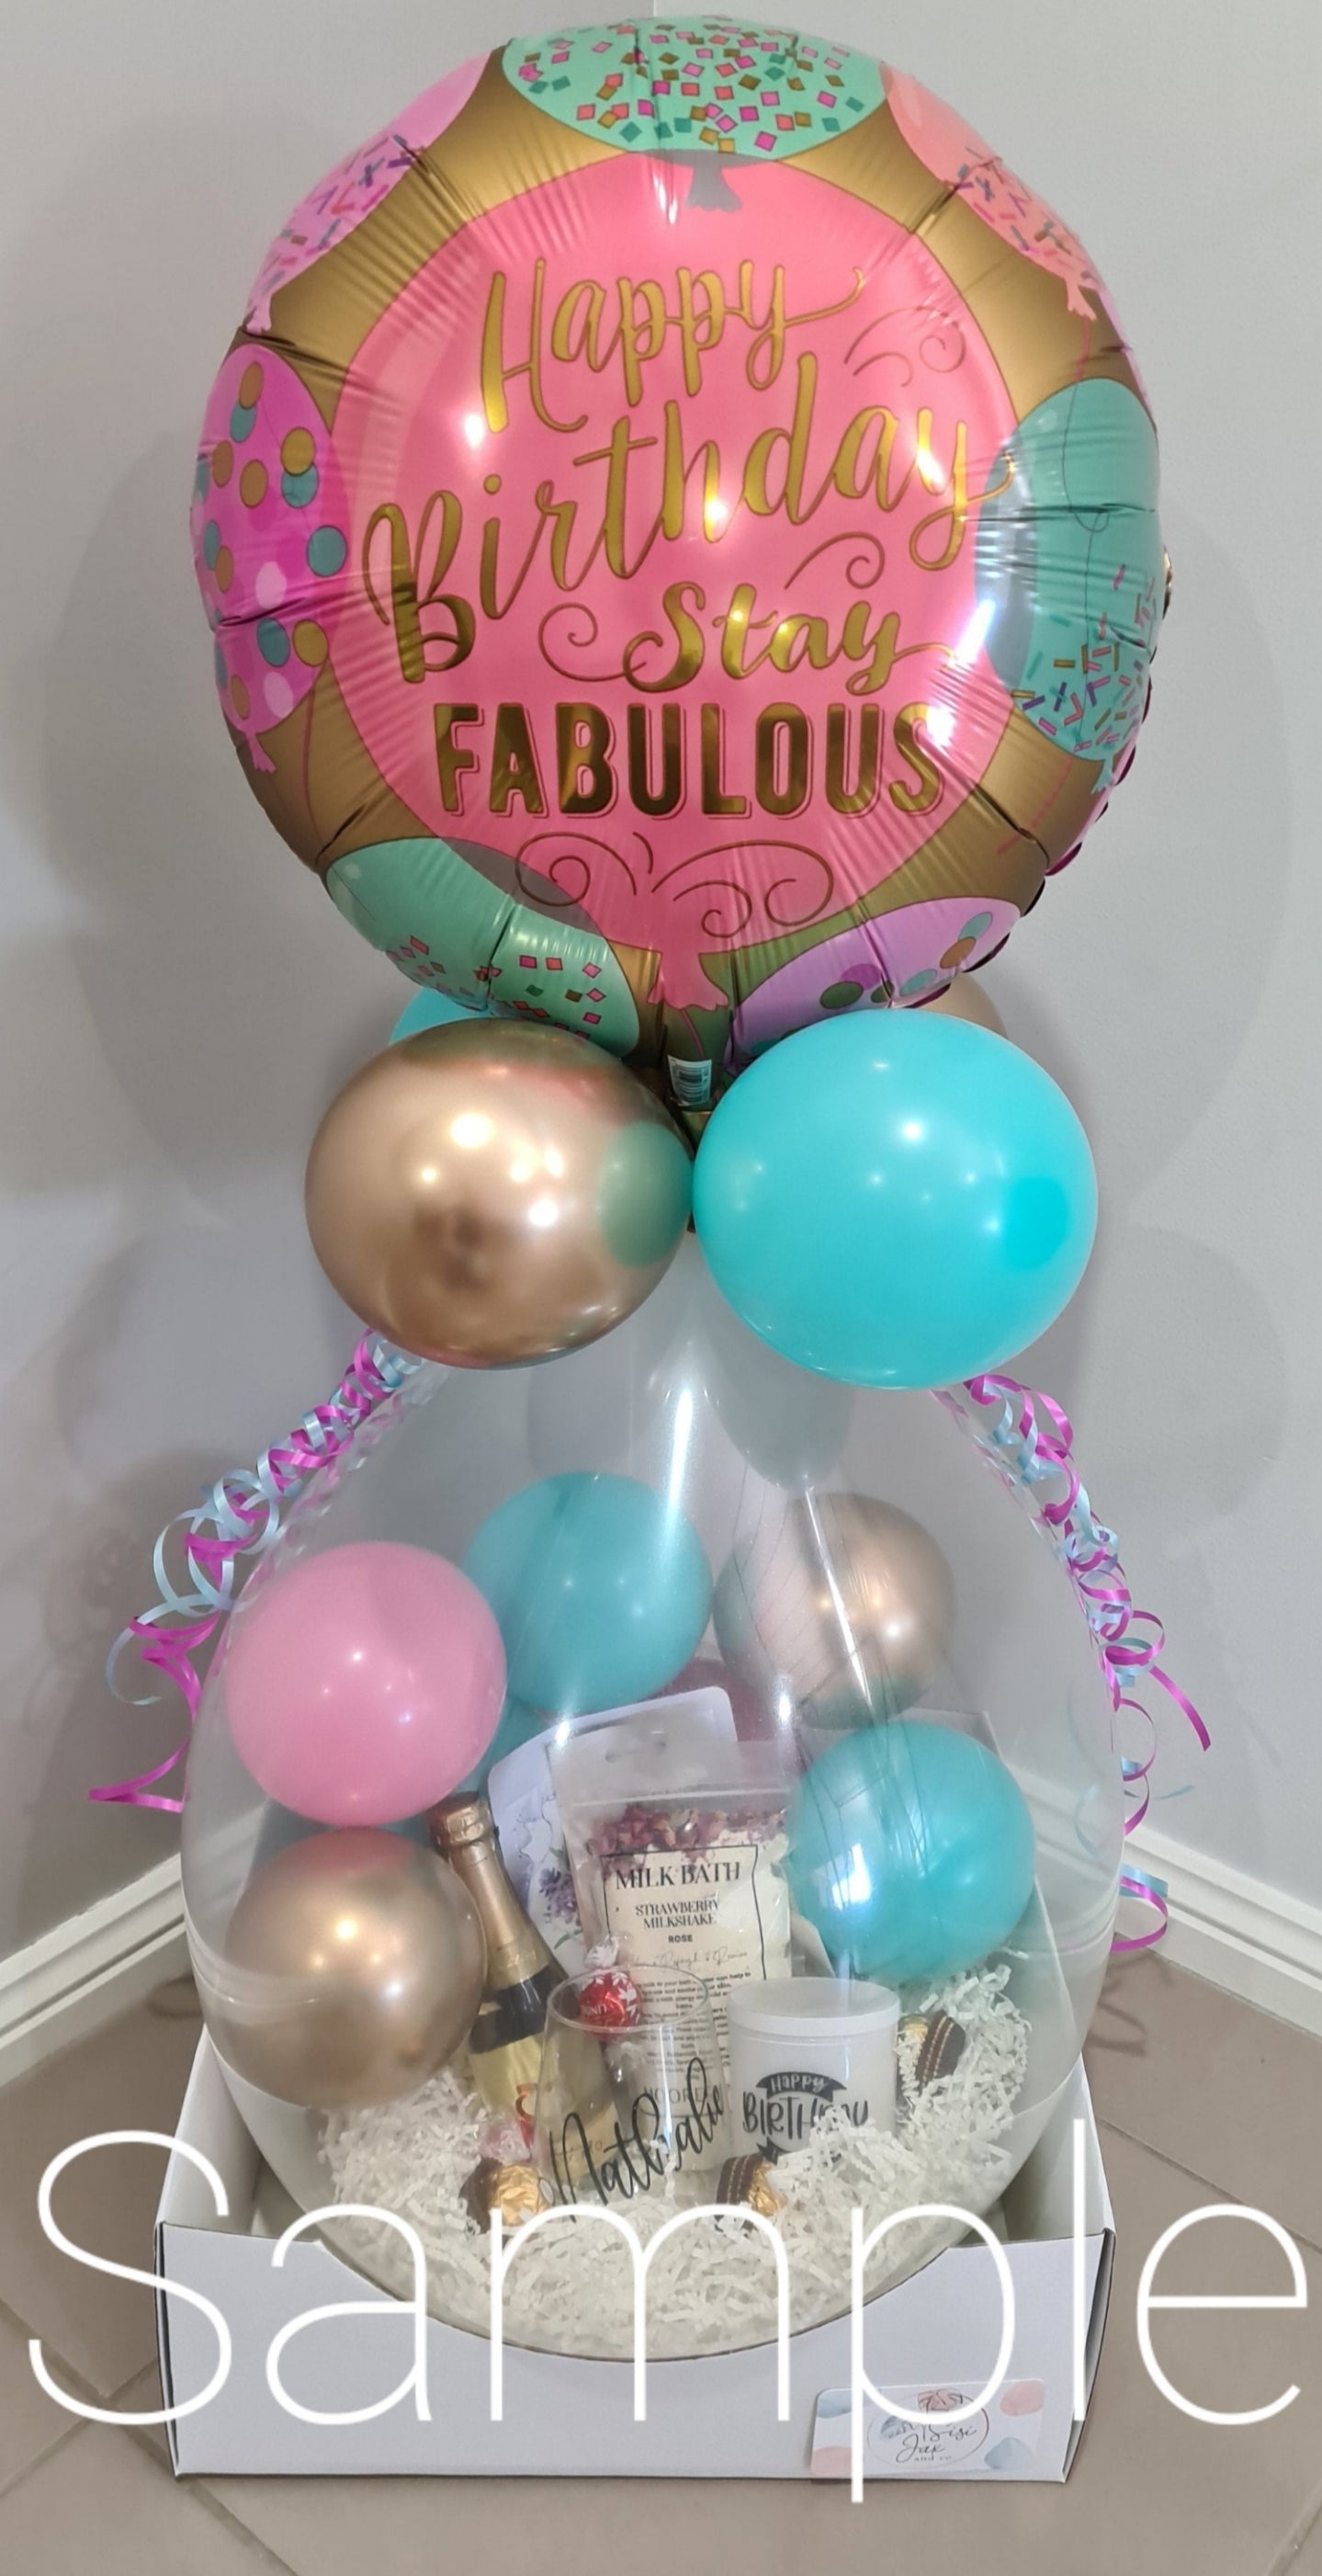 Birthday Bursting Balloon Gift 105